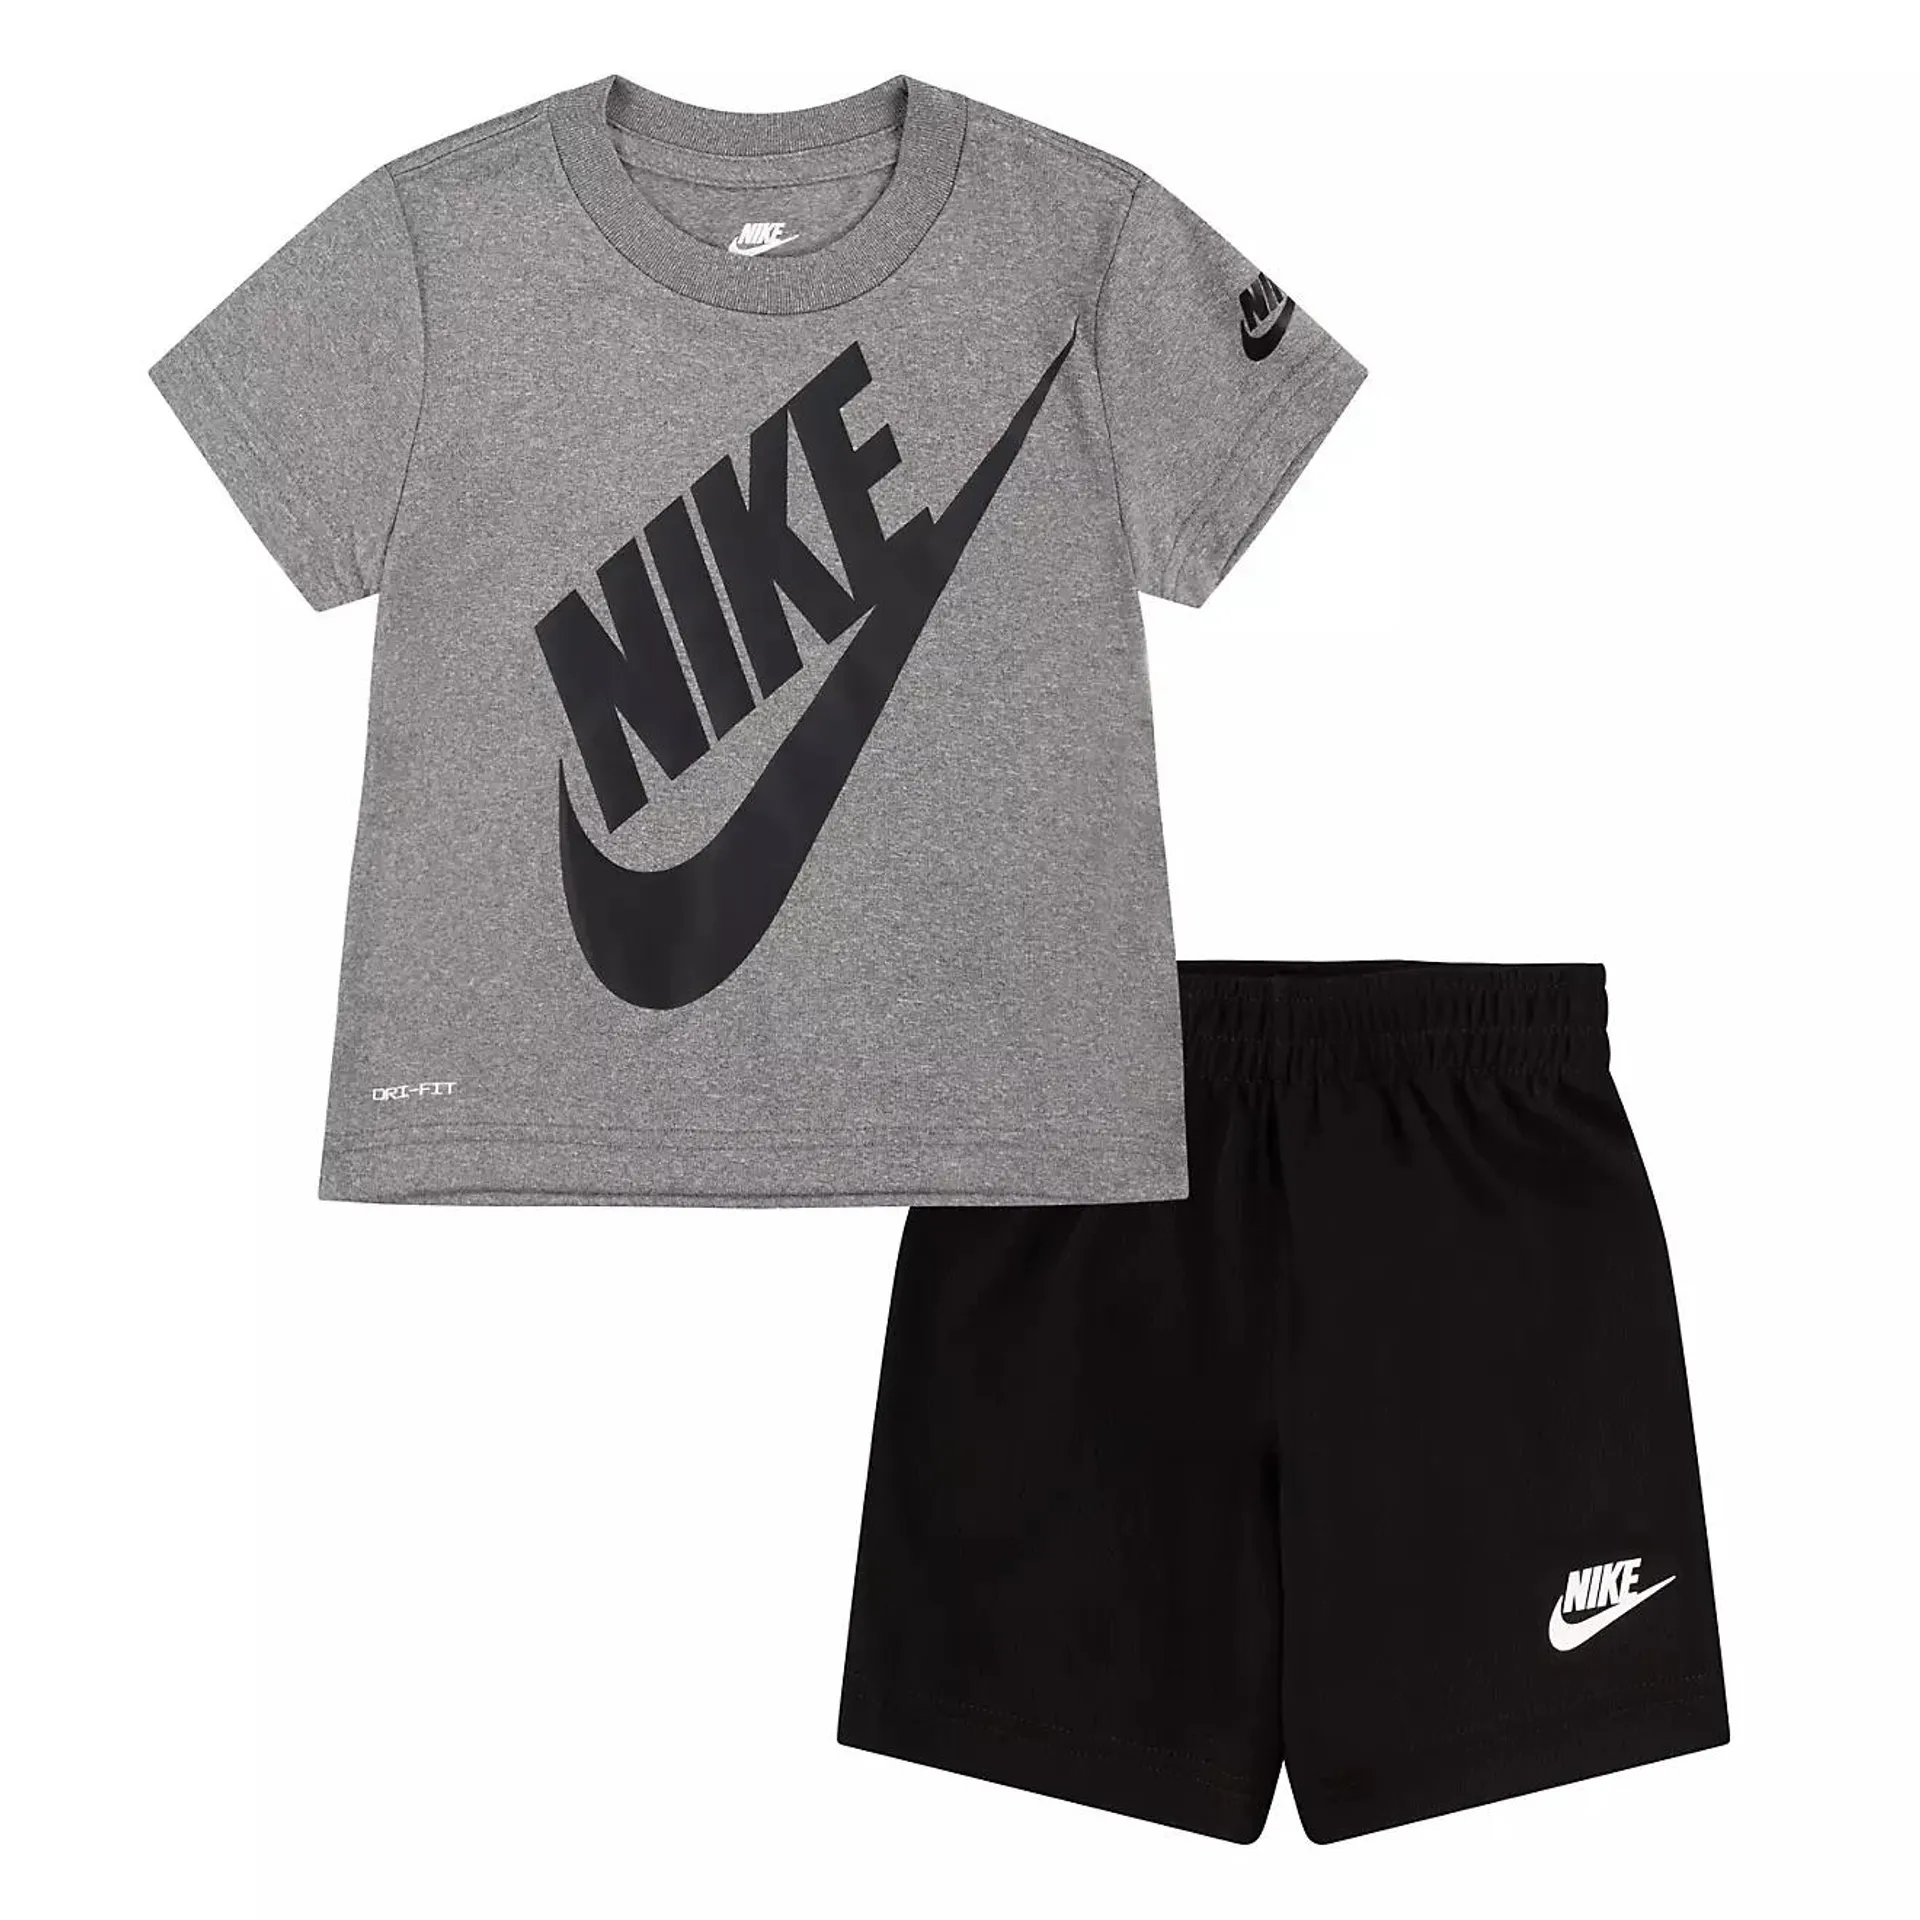 Nike Toddler Boys’ Dri-FIT Futura T-shirt and Shorts Set